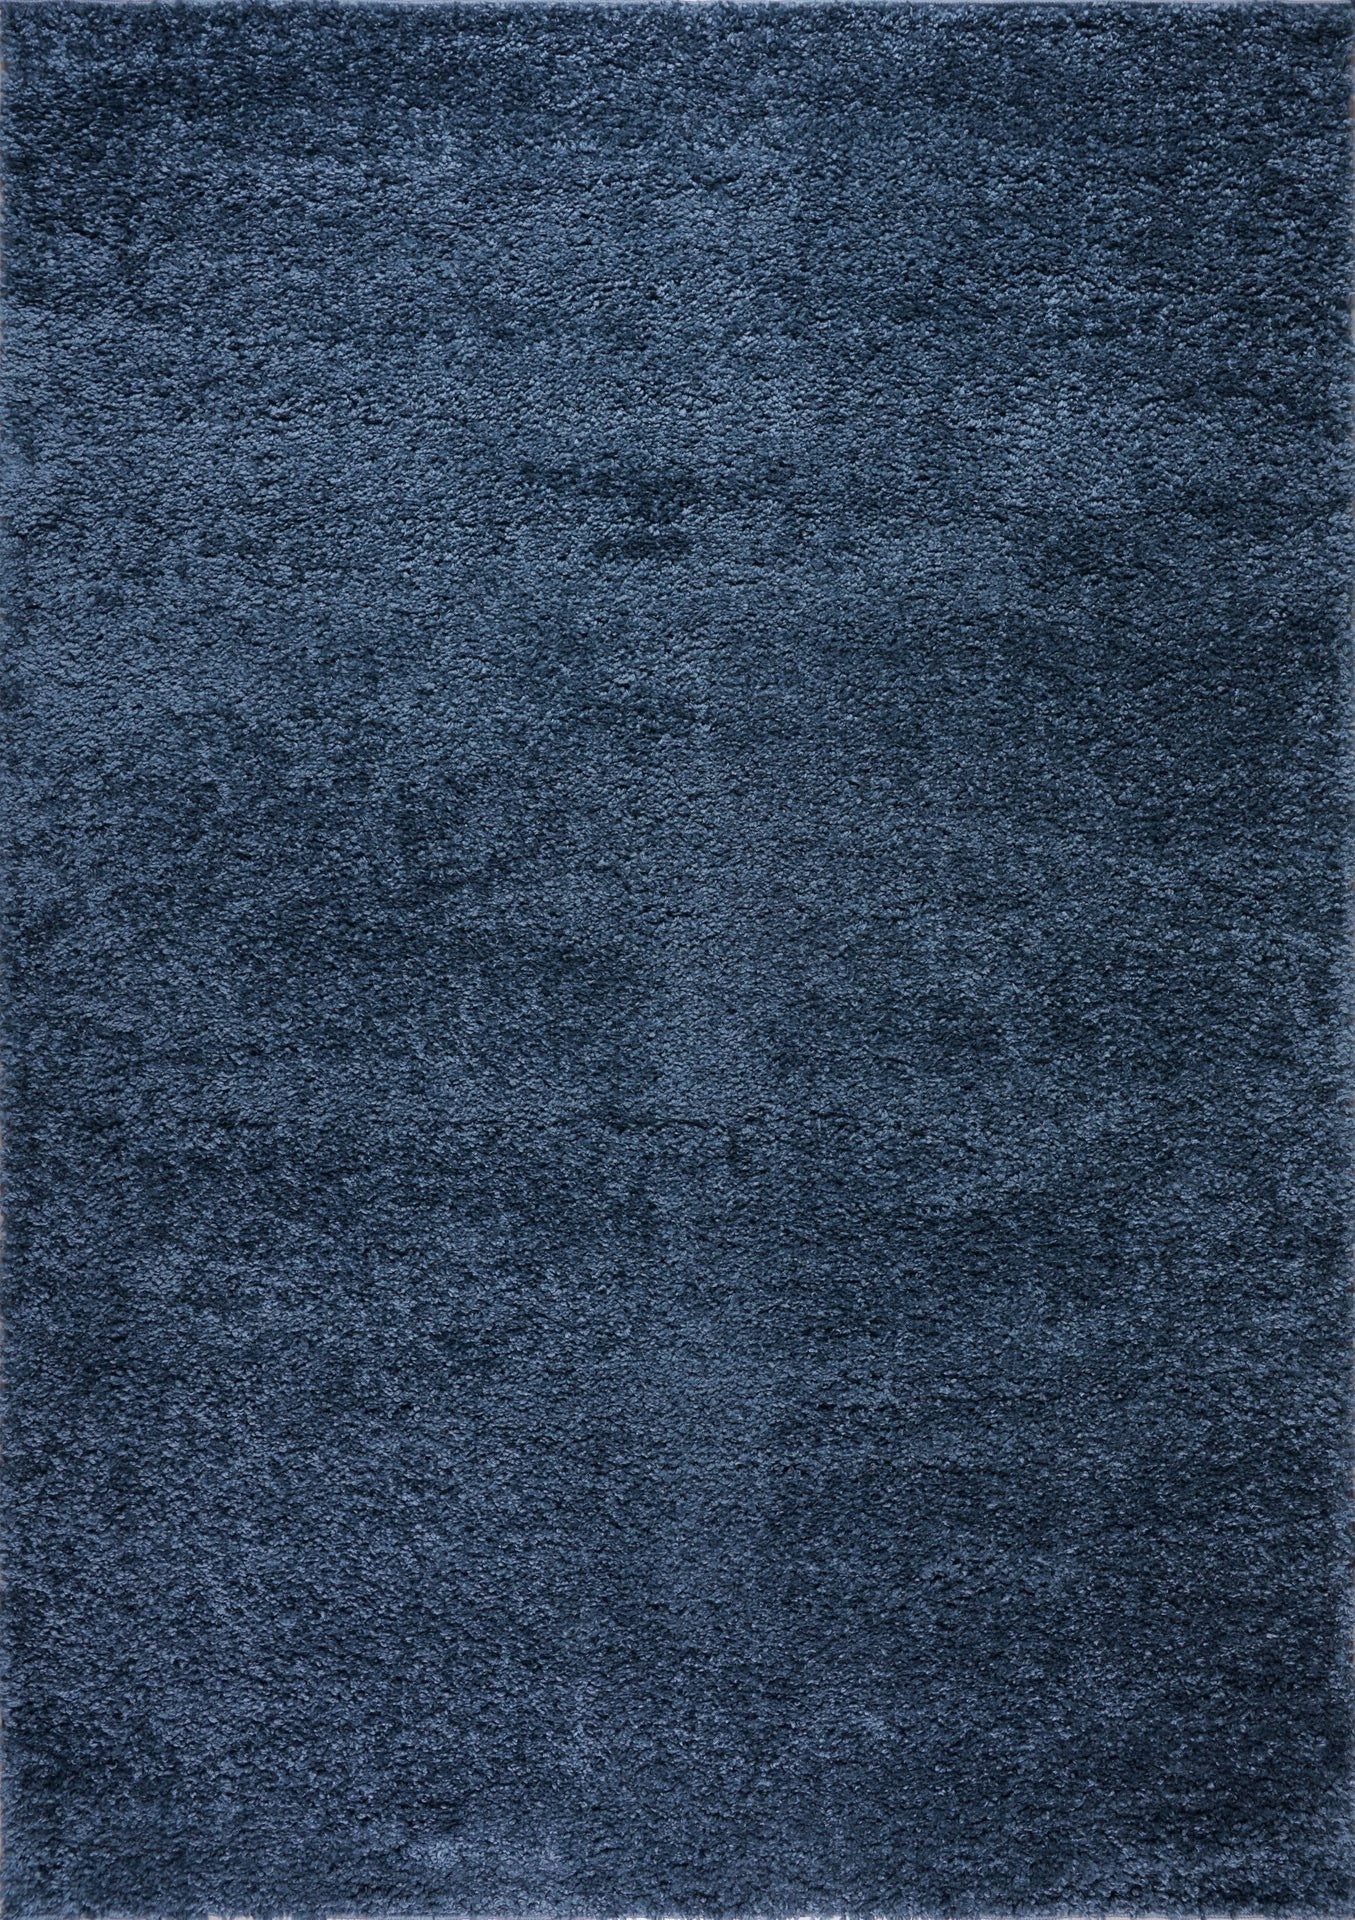 ladole rugs solid color shaggy meknes durable beautiful turkish indoor small mat doormat rug in blue 110 x 211 57cm x 90cm 2x3 Doormat, Entrance, Balcony, Bathroom, Washroom